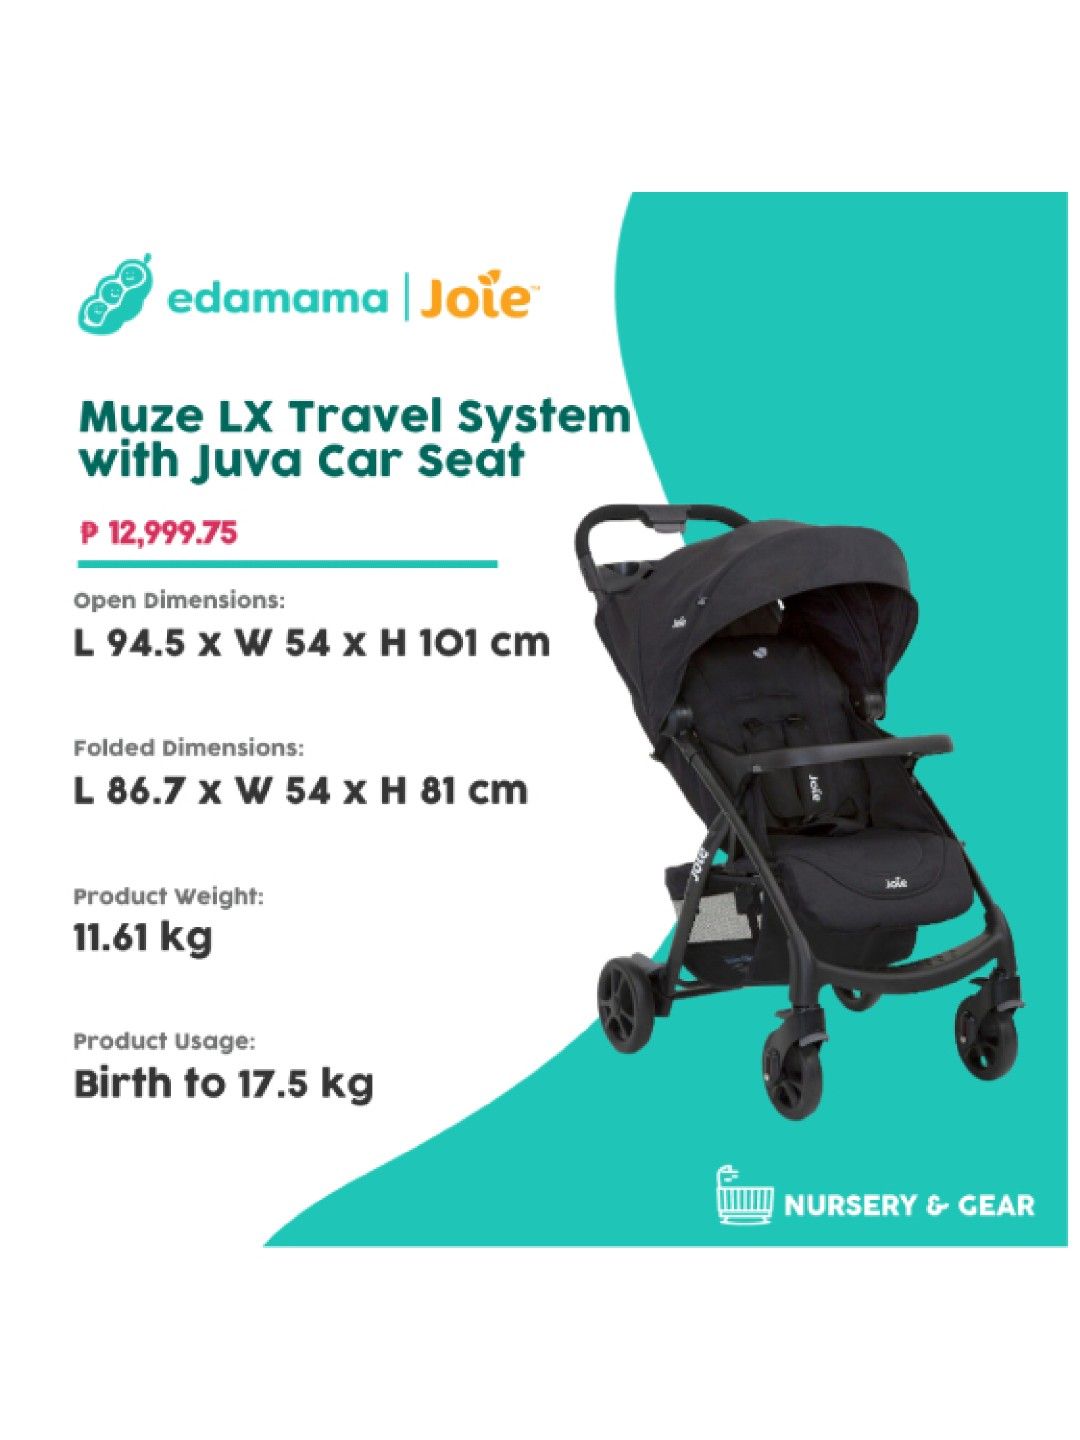 Joie Muze LX Travel System with Juva Car Seat (Coal- Thumbnail 2)